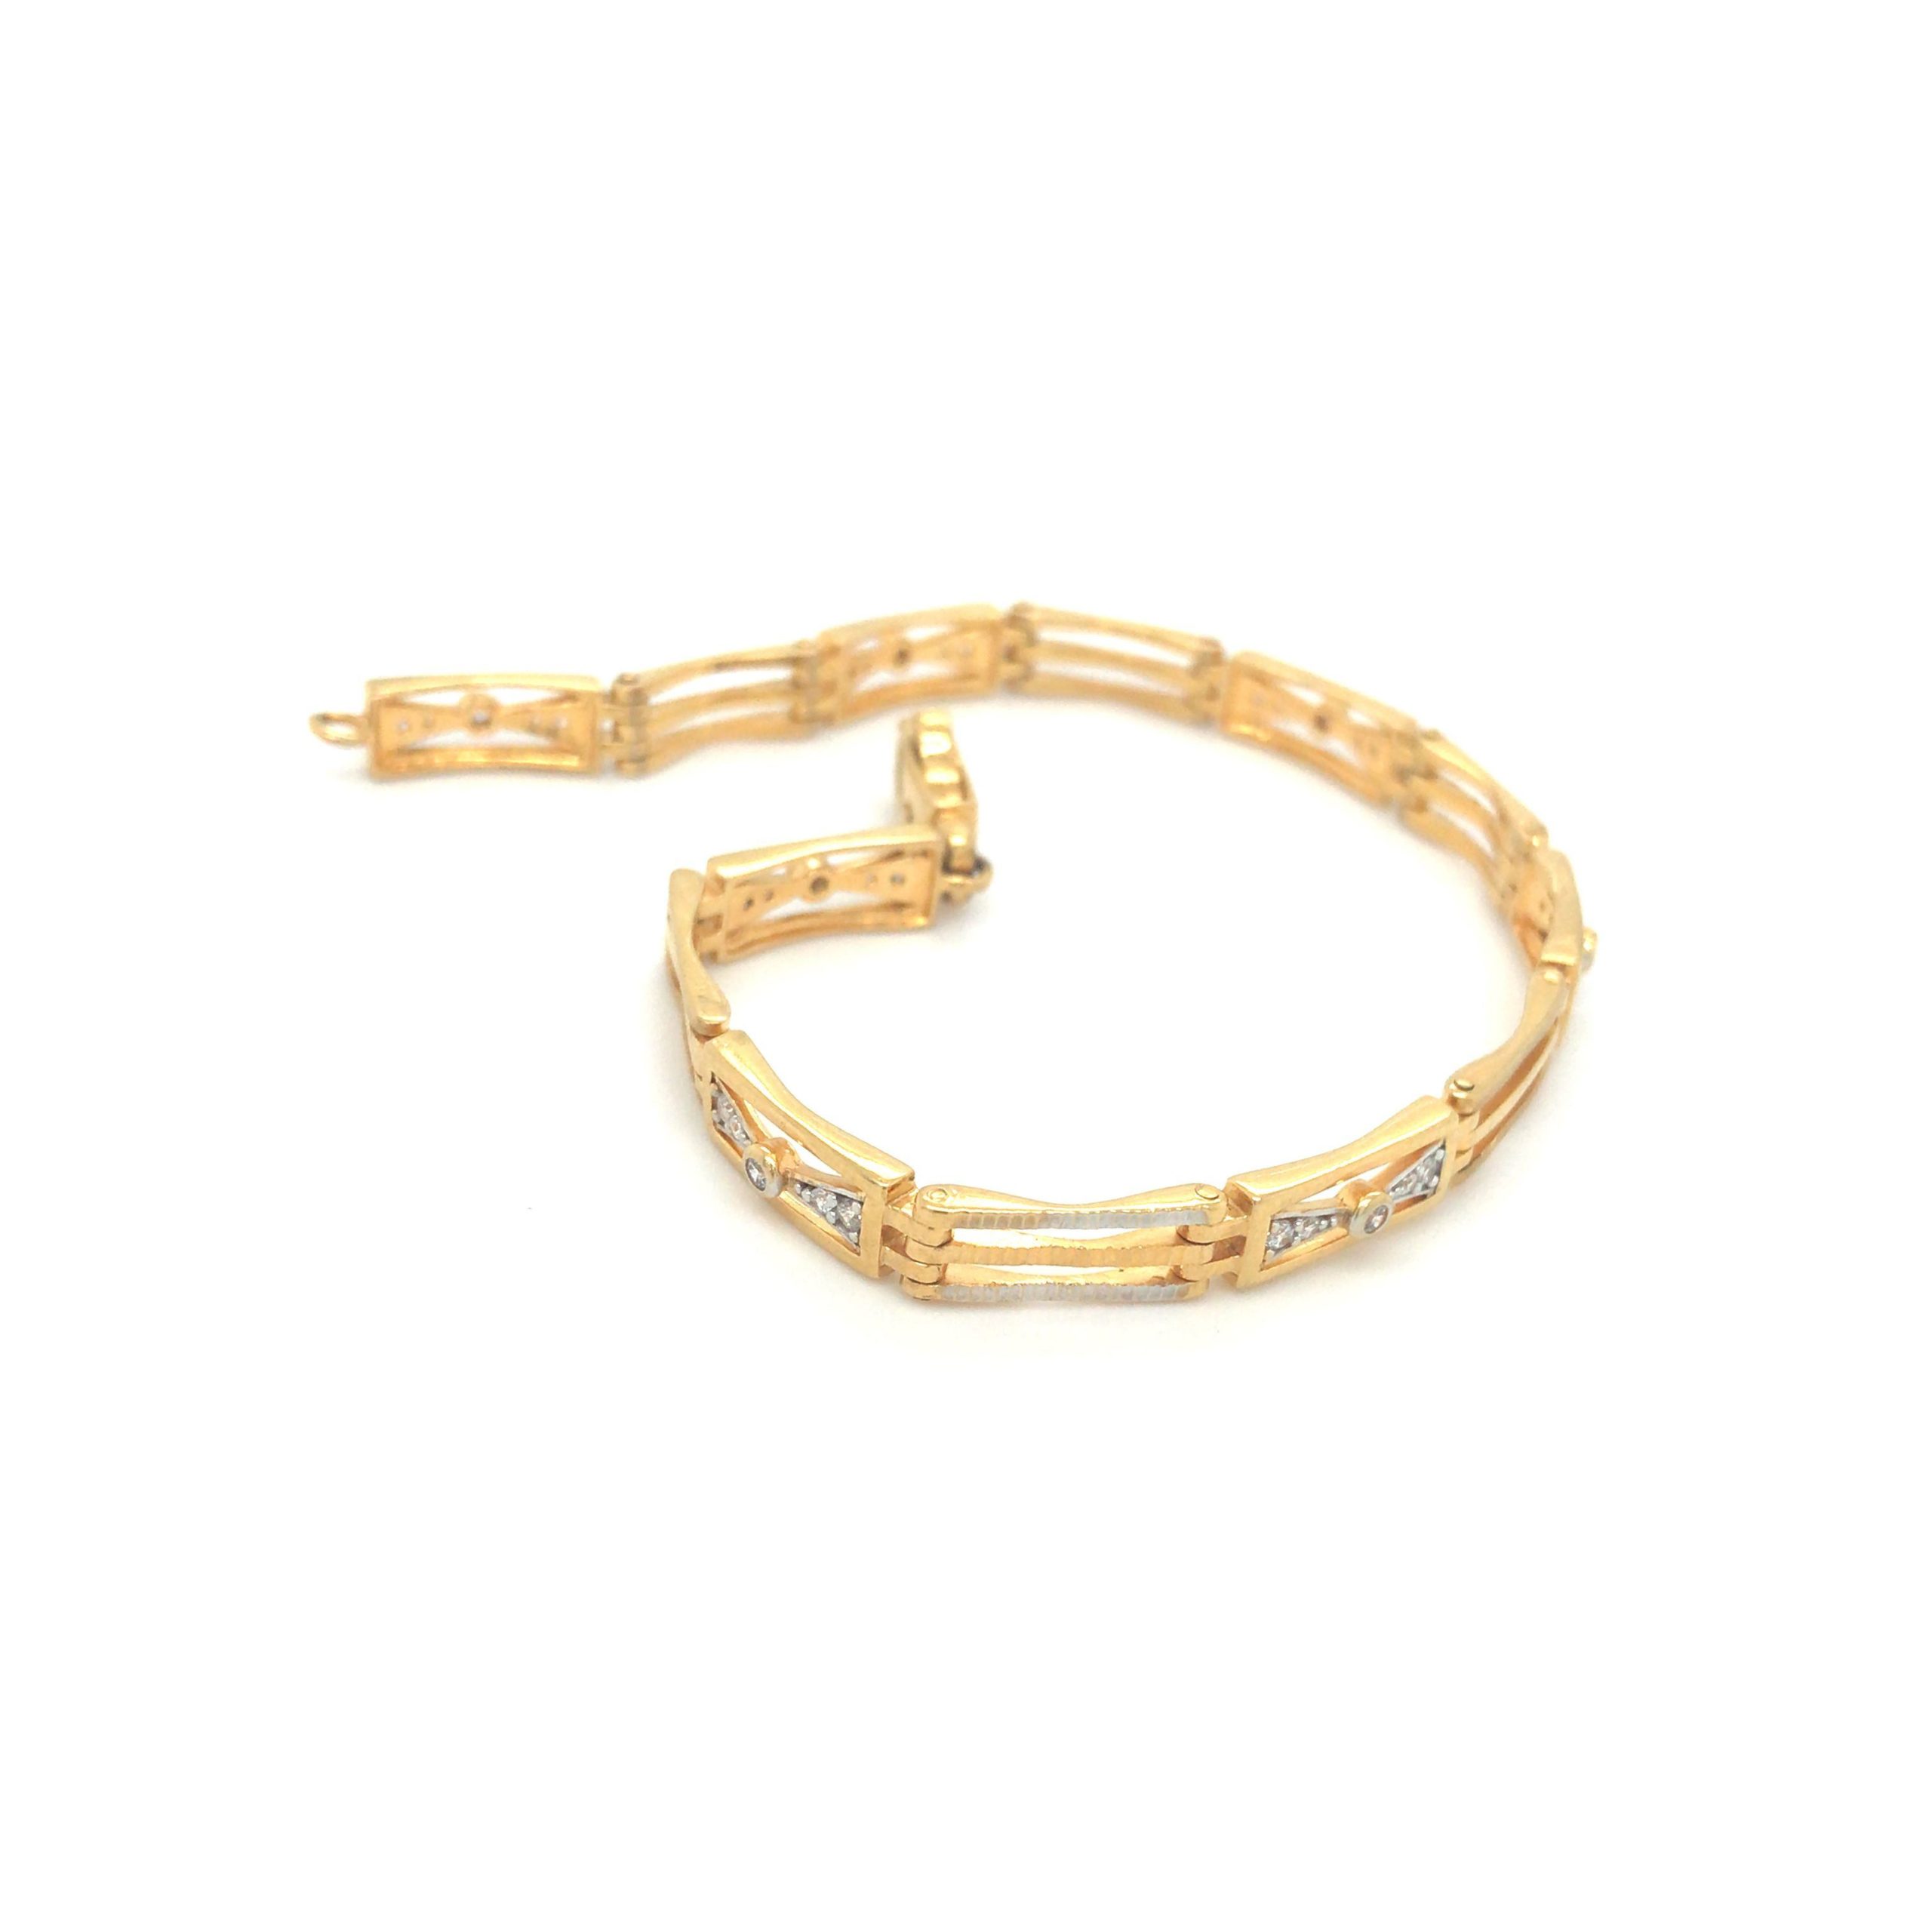 22KT Gold Mens Bracelet  Giriraj Jewellers  Man gold bracelet design  Mens gold bracelets Mens bracelet gold jewelry